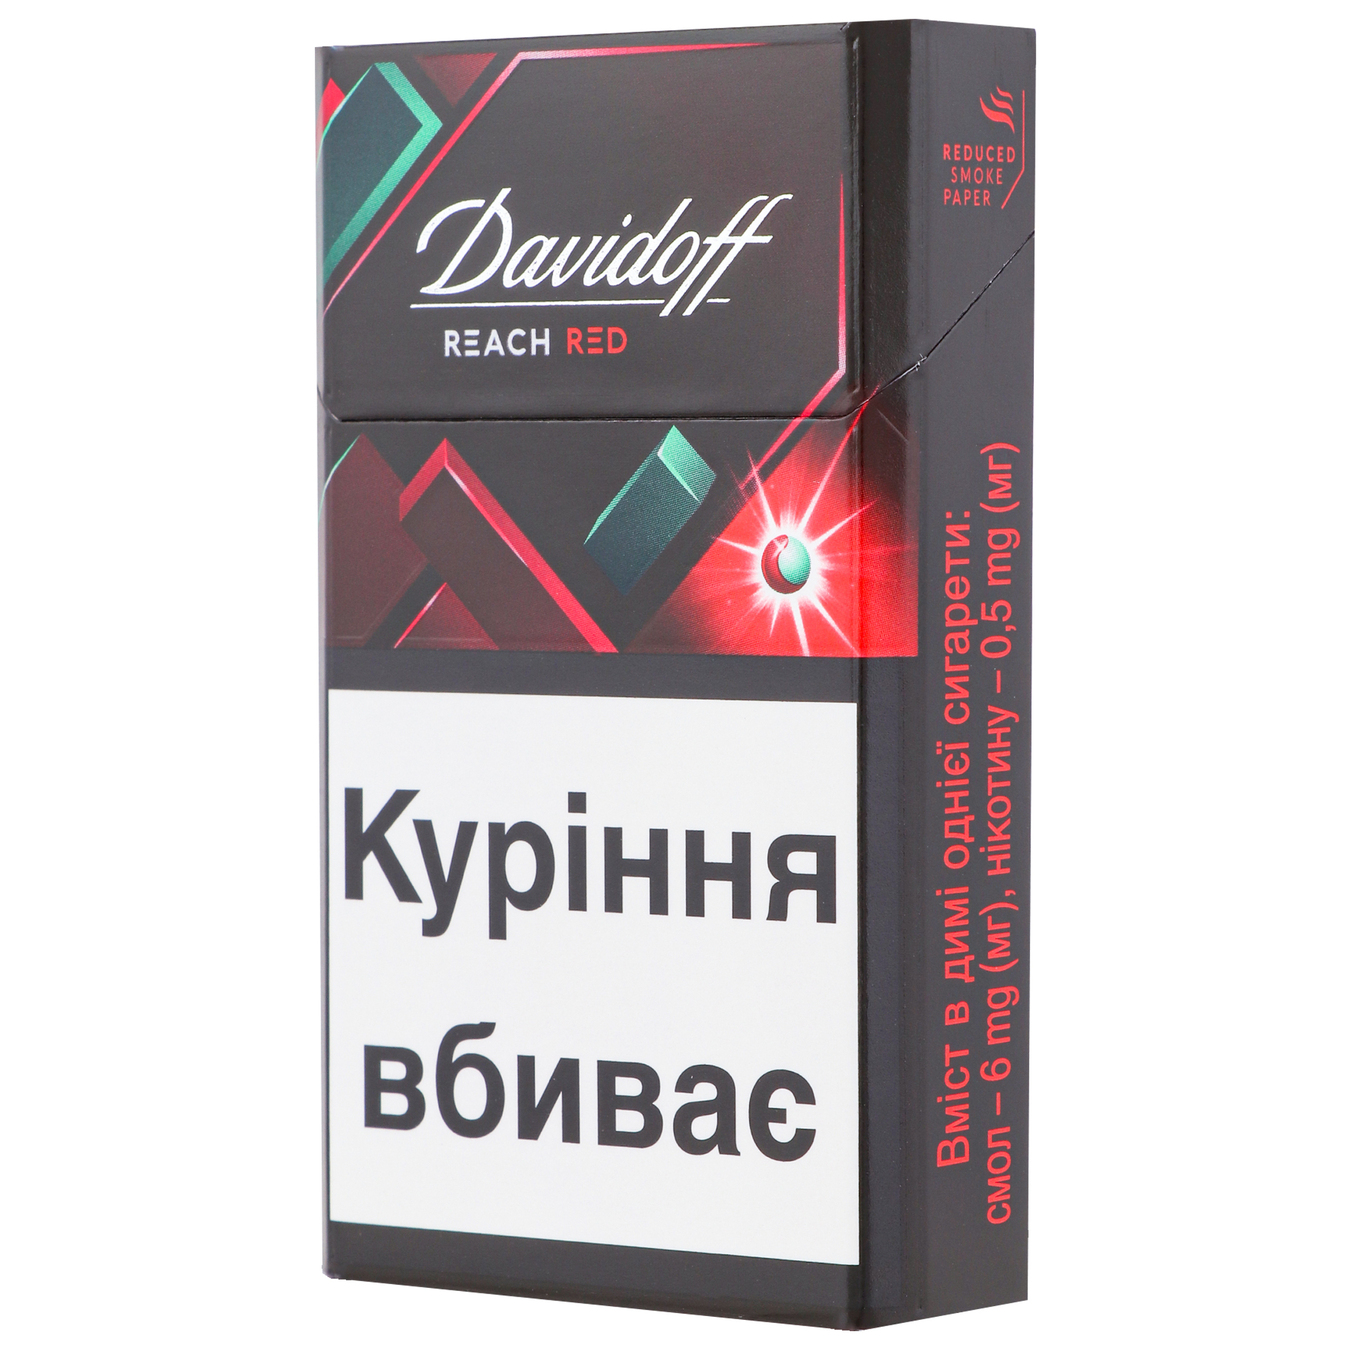 Сигареты Davidoff Reach Red Fusion 20шт (цена указана без акциза) 2